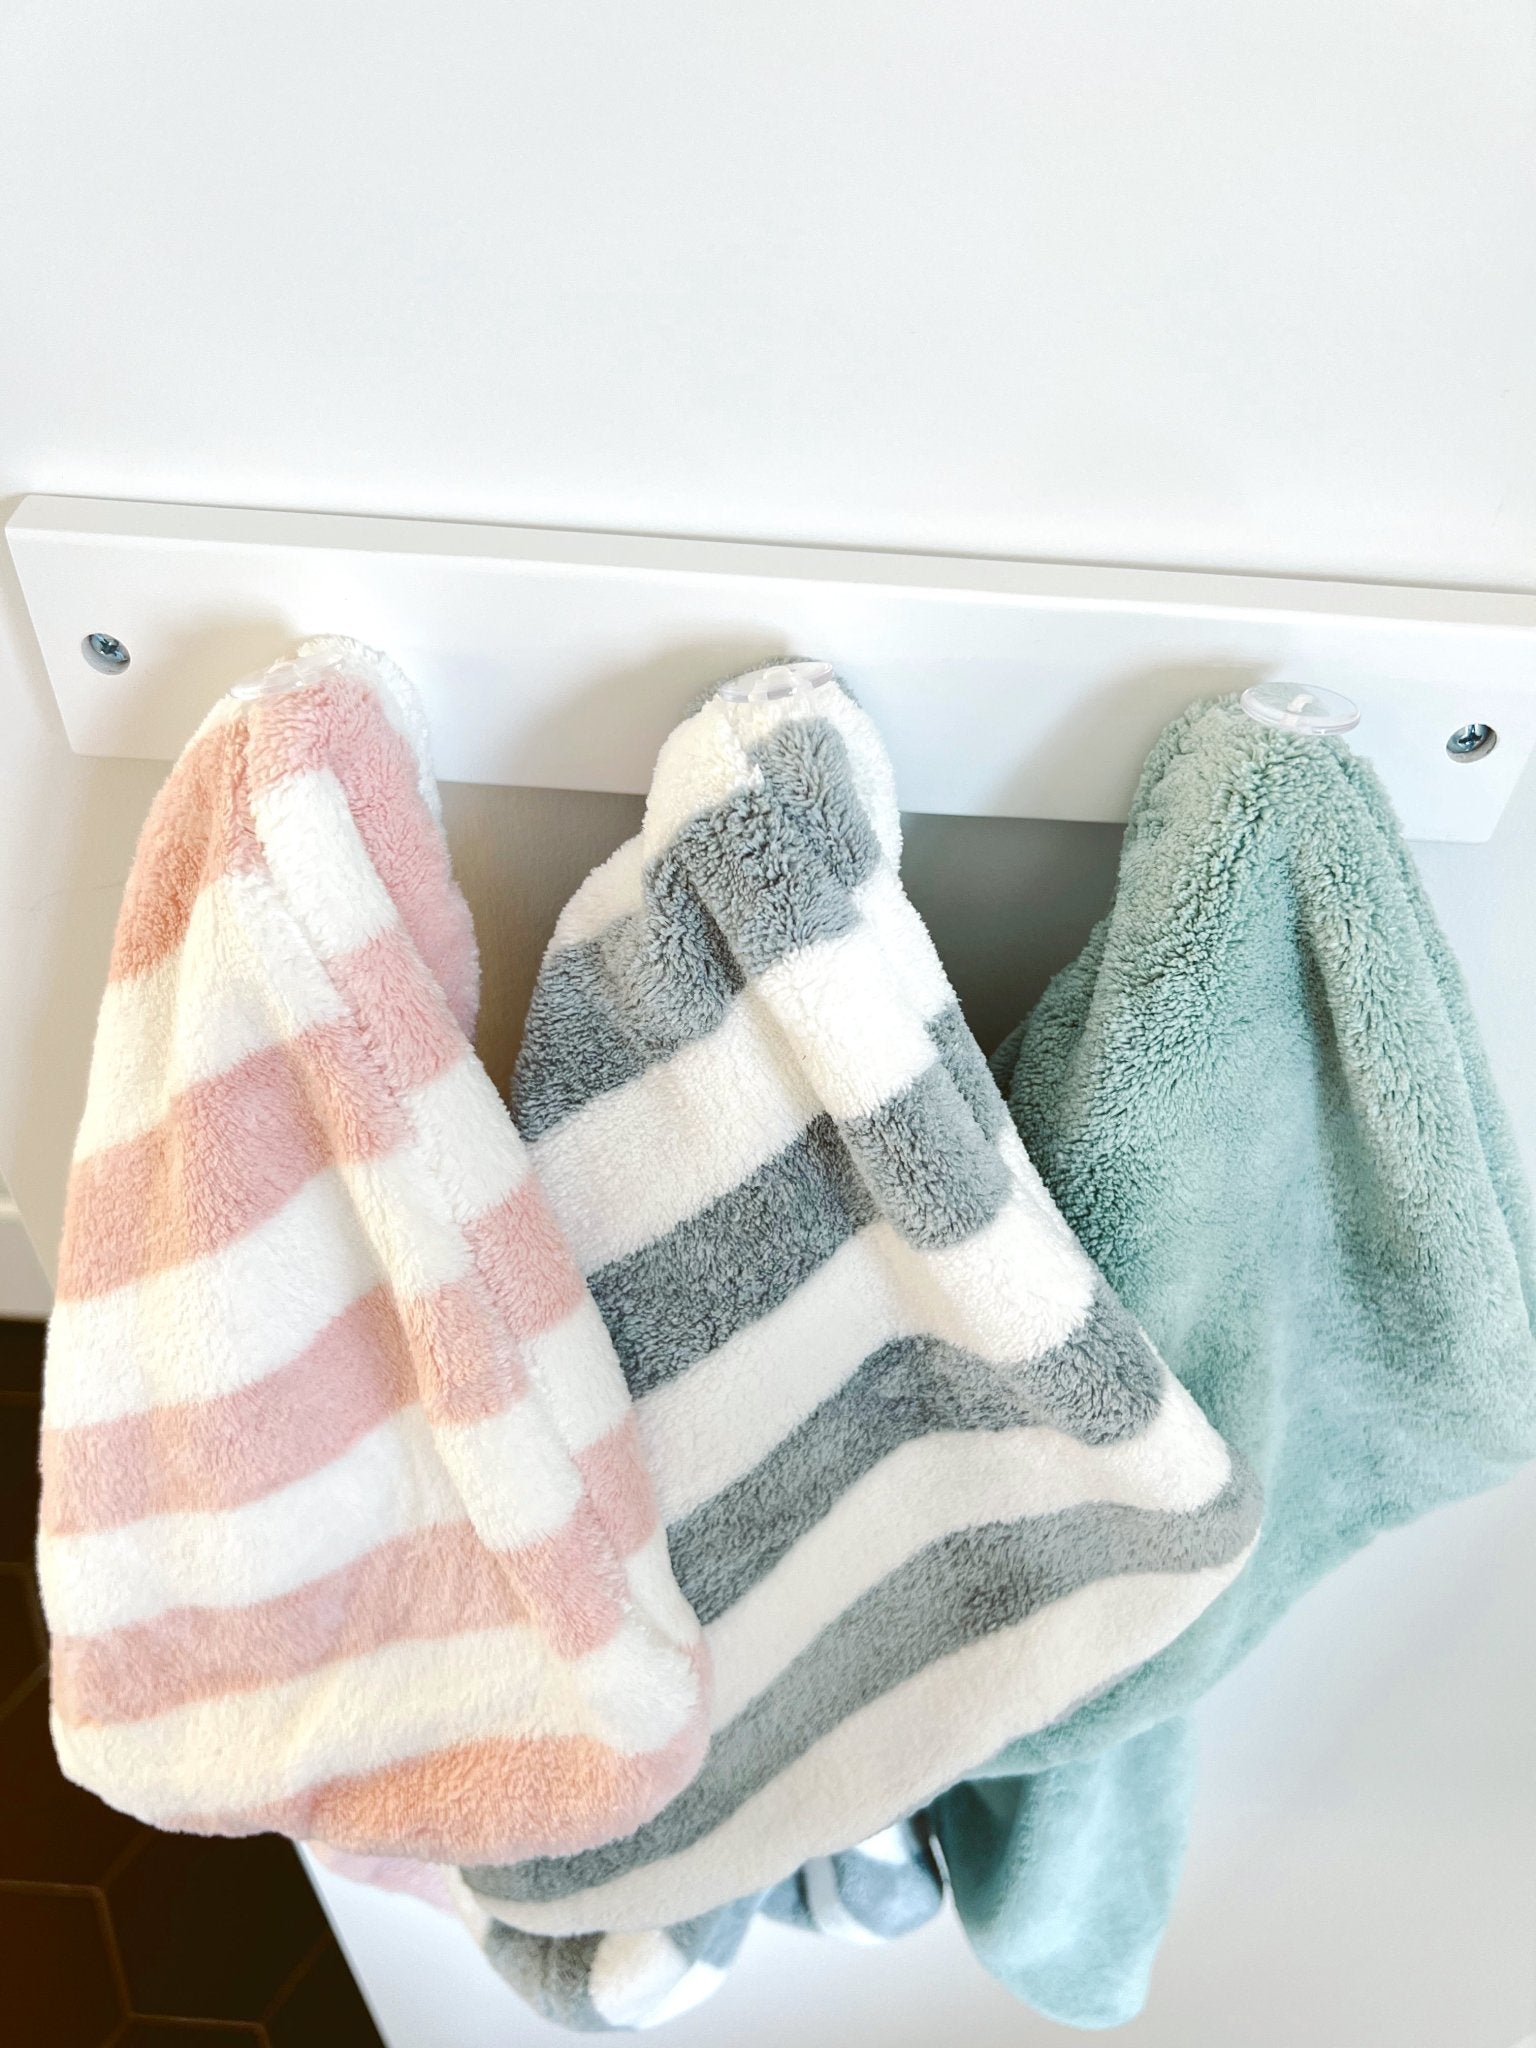 BUNDLE OF 3 - Microfiber Towel Wraps - Beyond Scrunchies